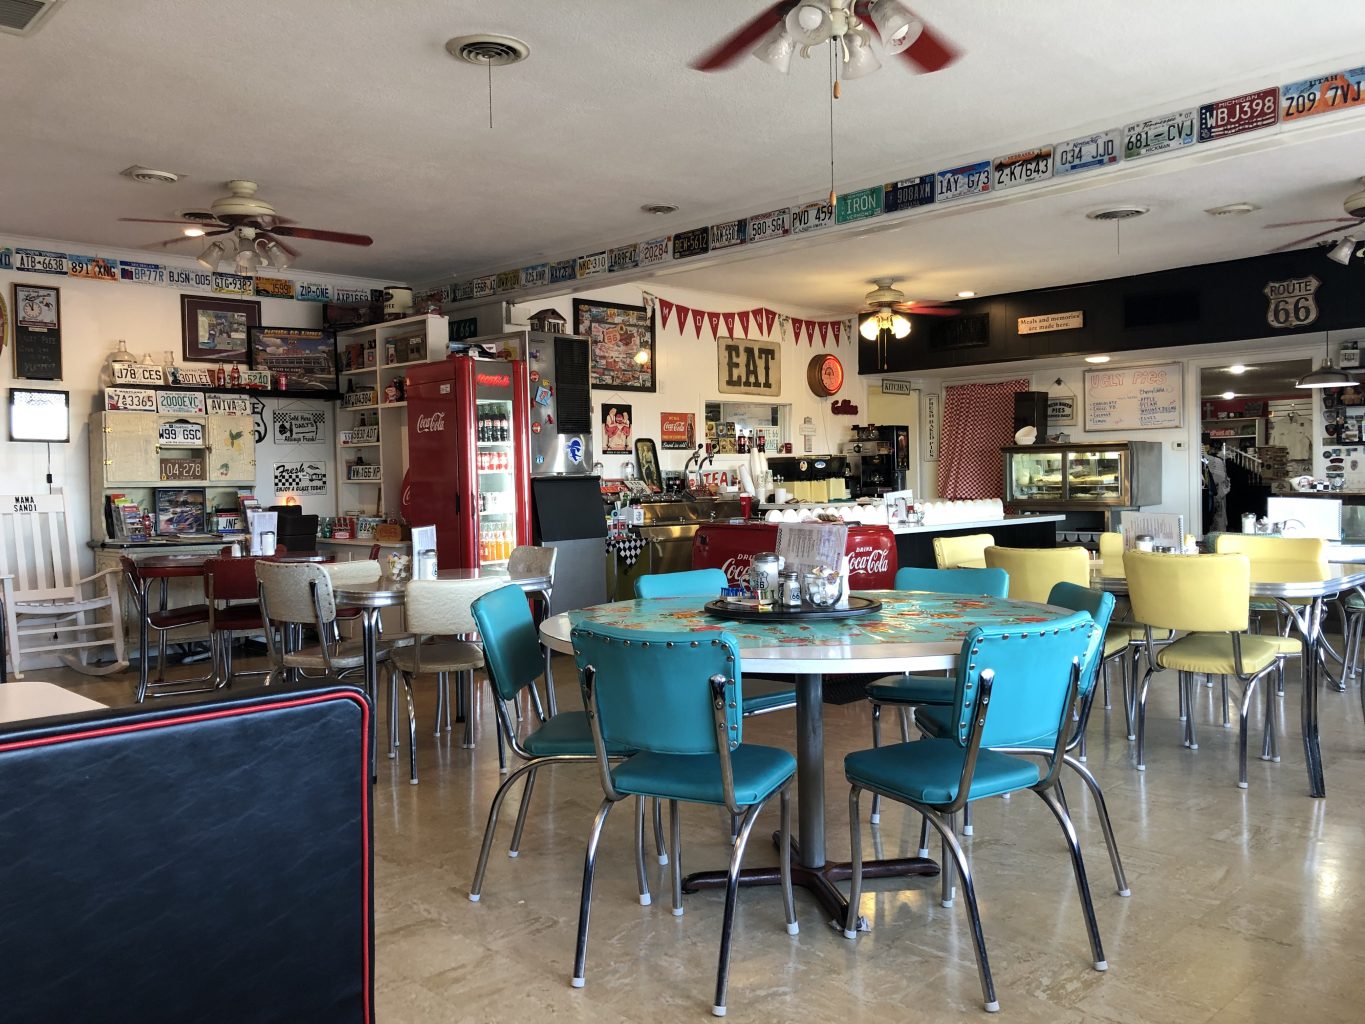 Midpoint Cafe. RUTA 66, Etapa 5: Amarillo - Albuquerque (600 km)